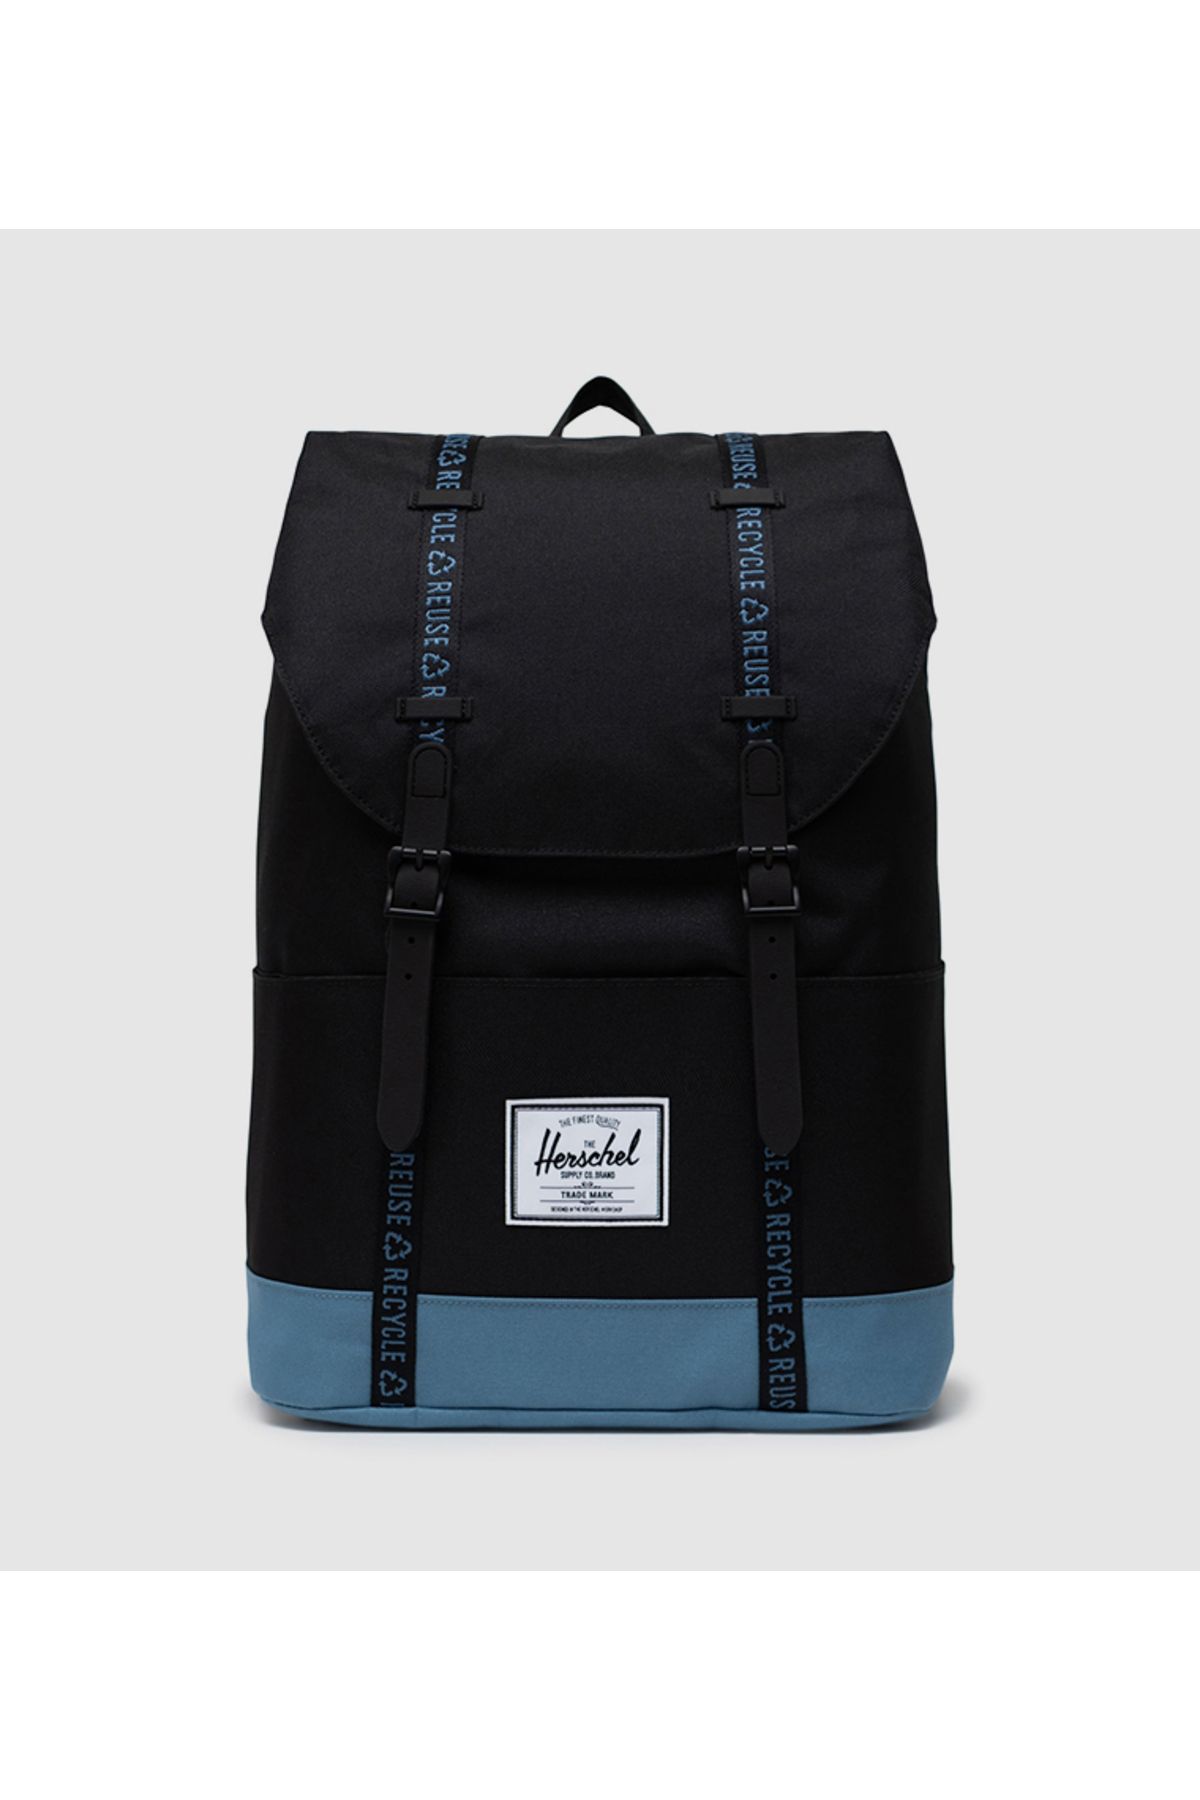 Herschel Retreat Color Block Flap Closure Backpack 43x30x15cm